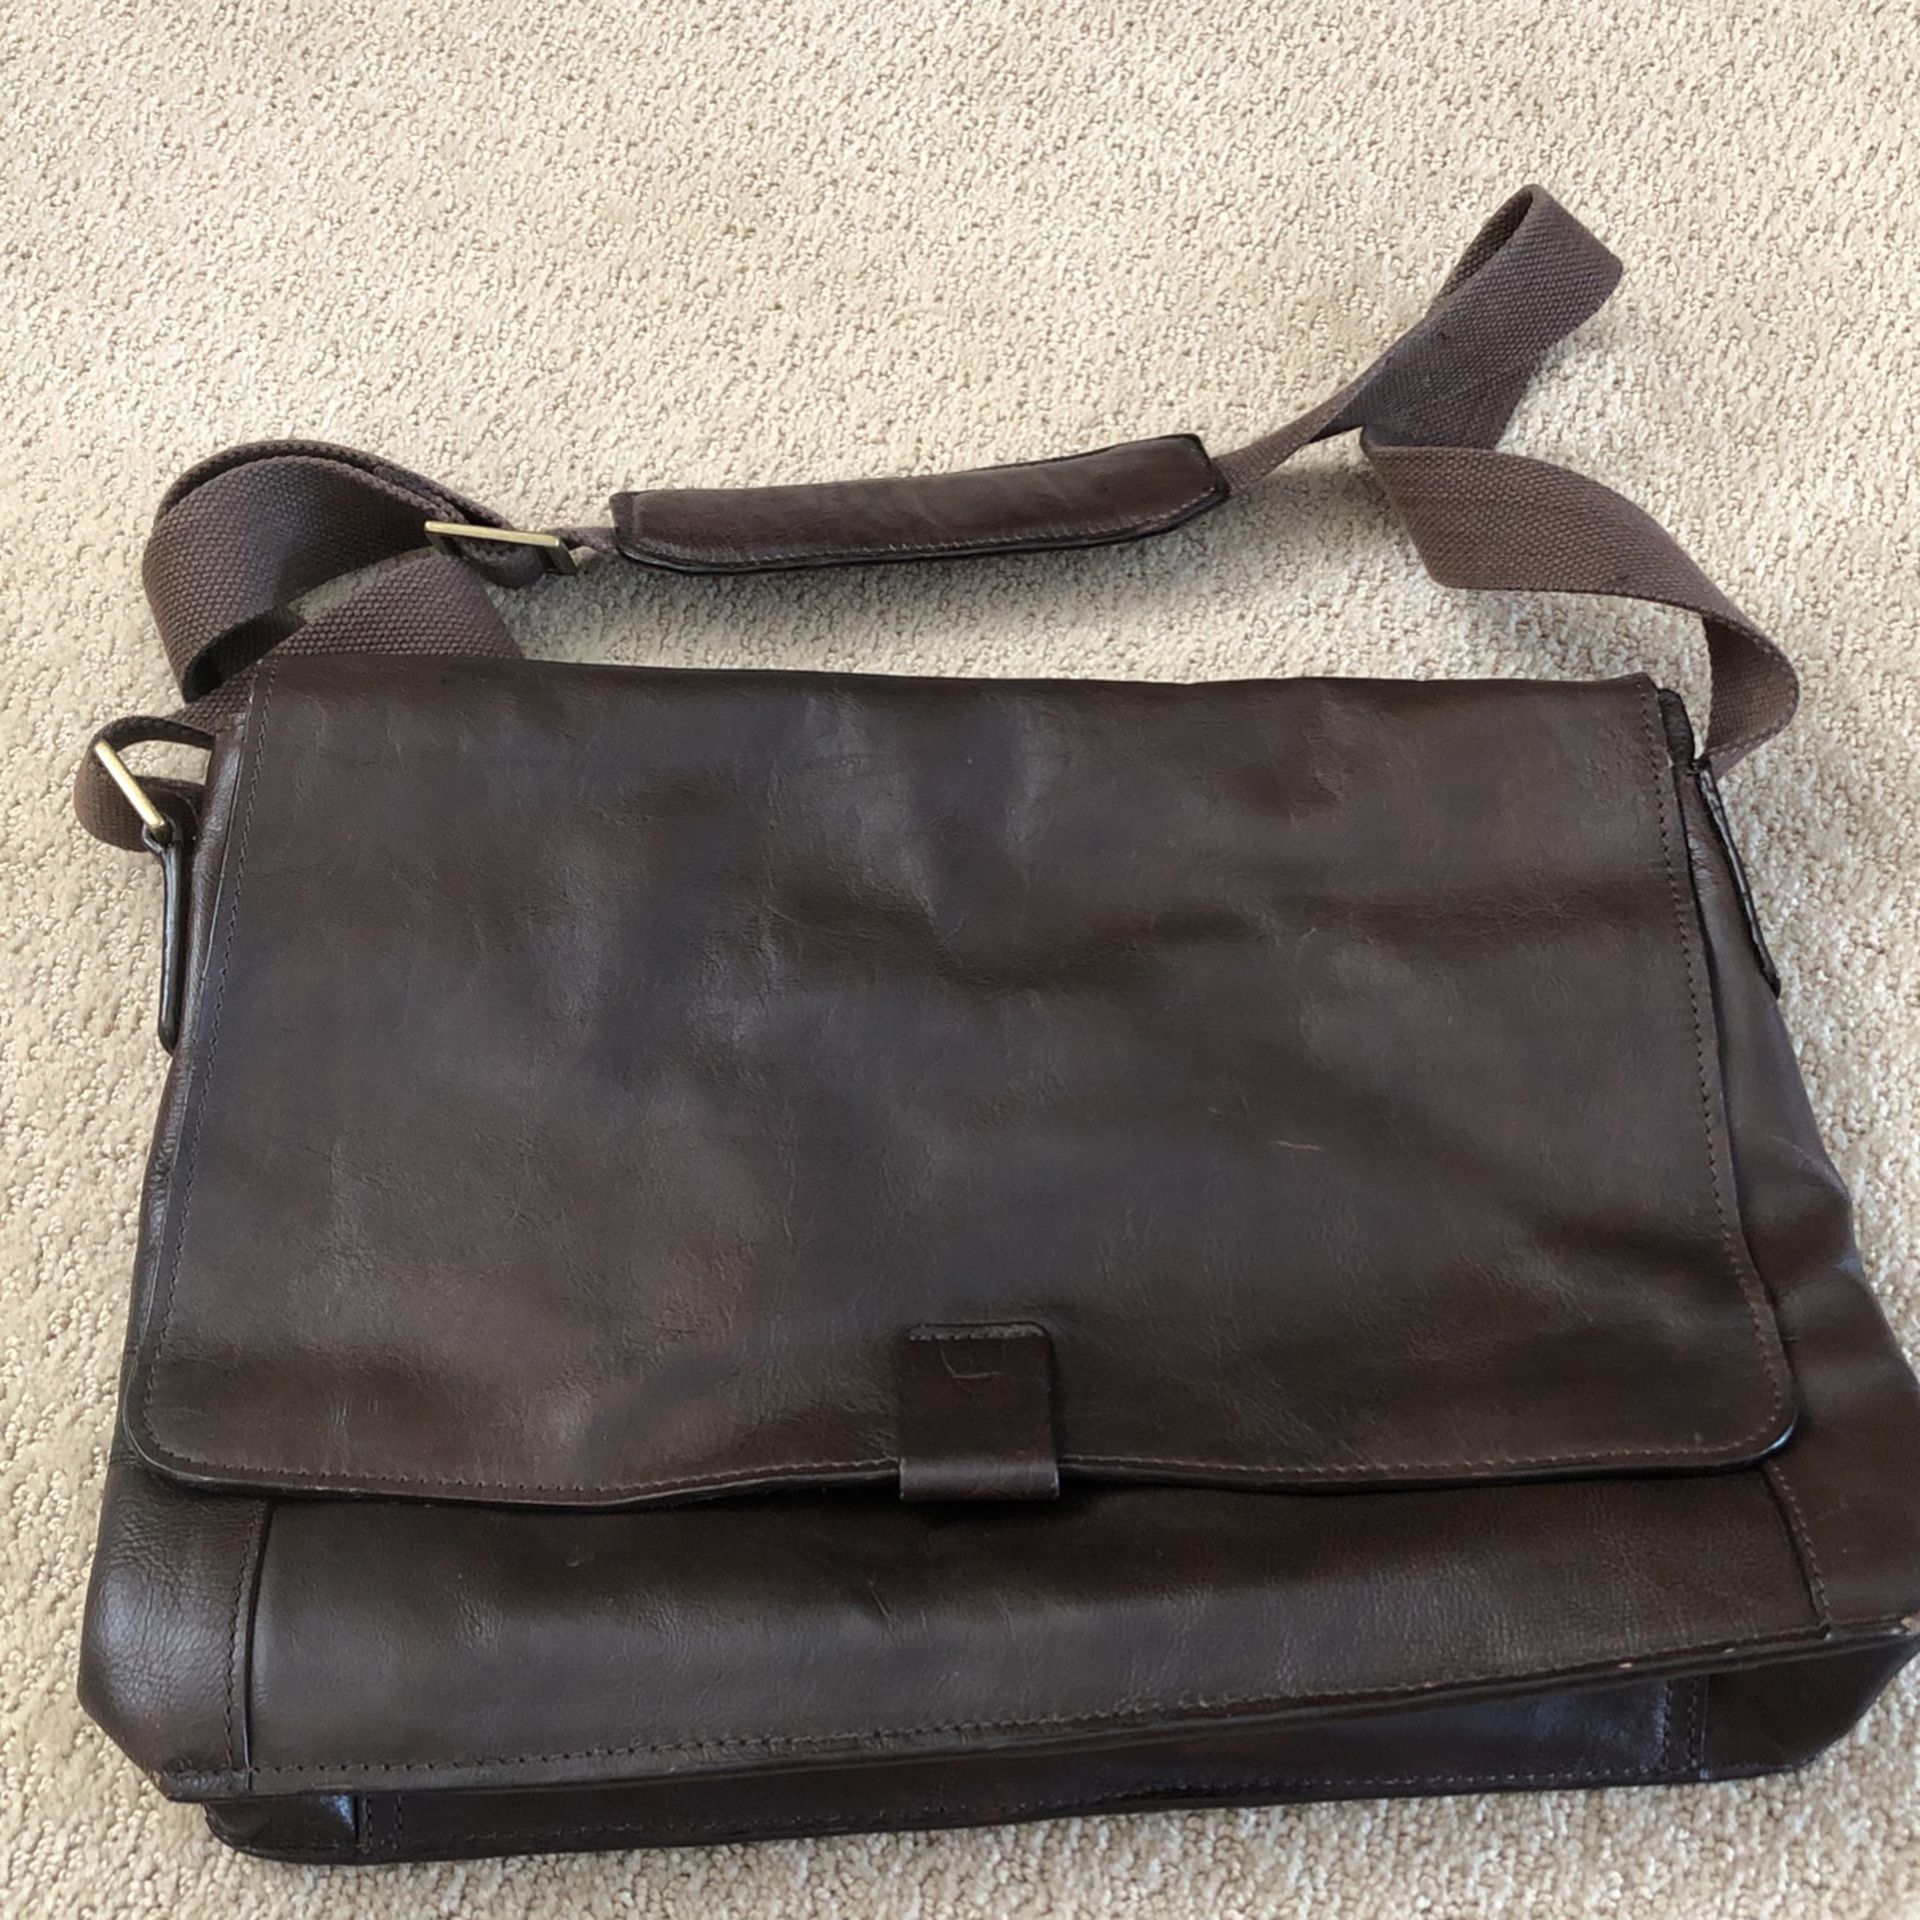 Hidesign Real Leather Messenger Bag